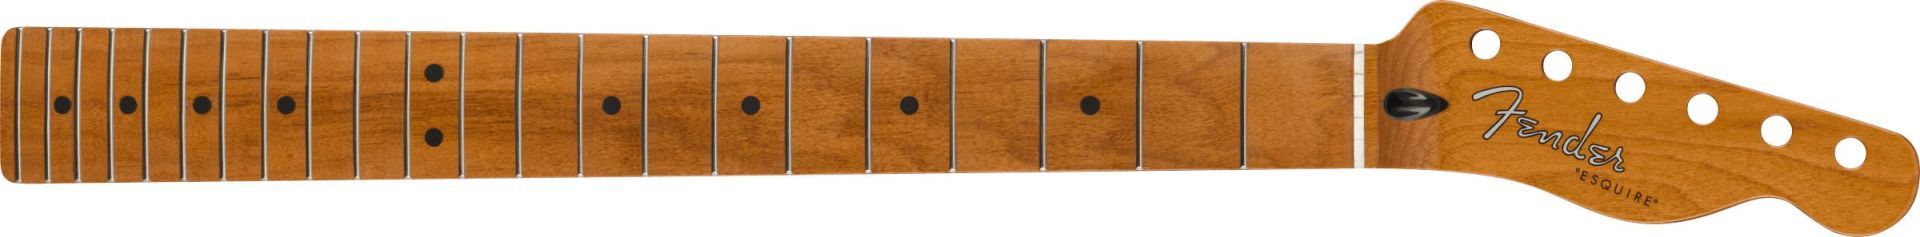 Fender 50s Modified Esquire Neck 22 Narrow Tall Frets 9.5 U Shape Roasted Maple